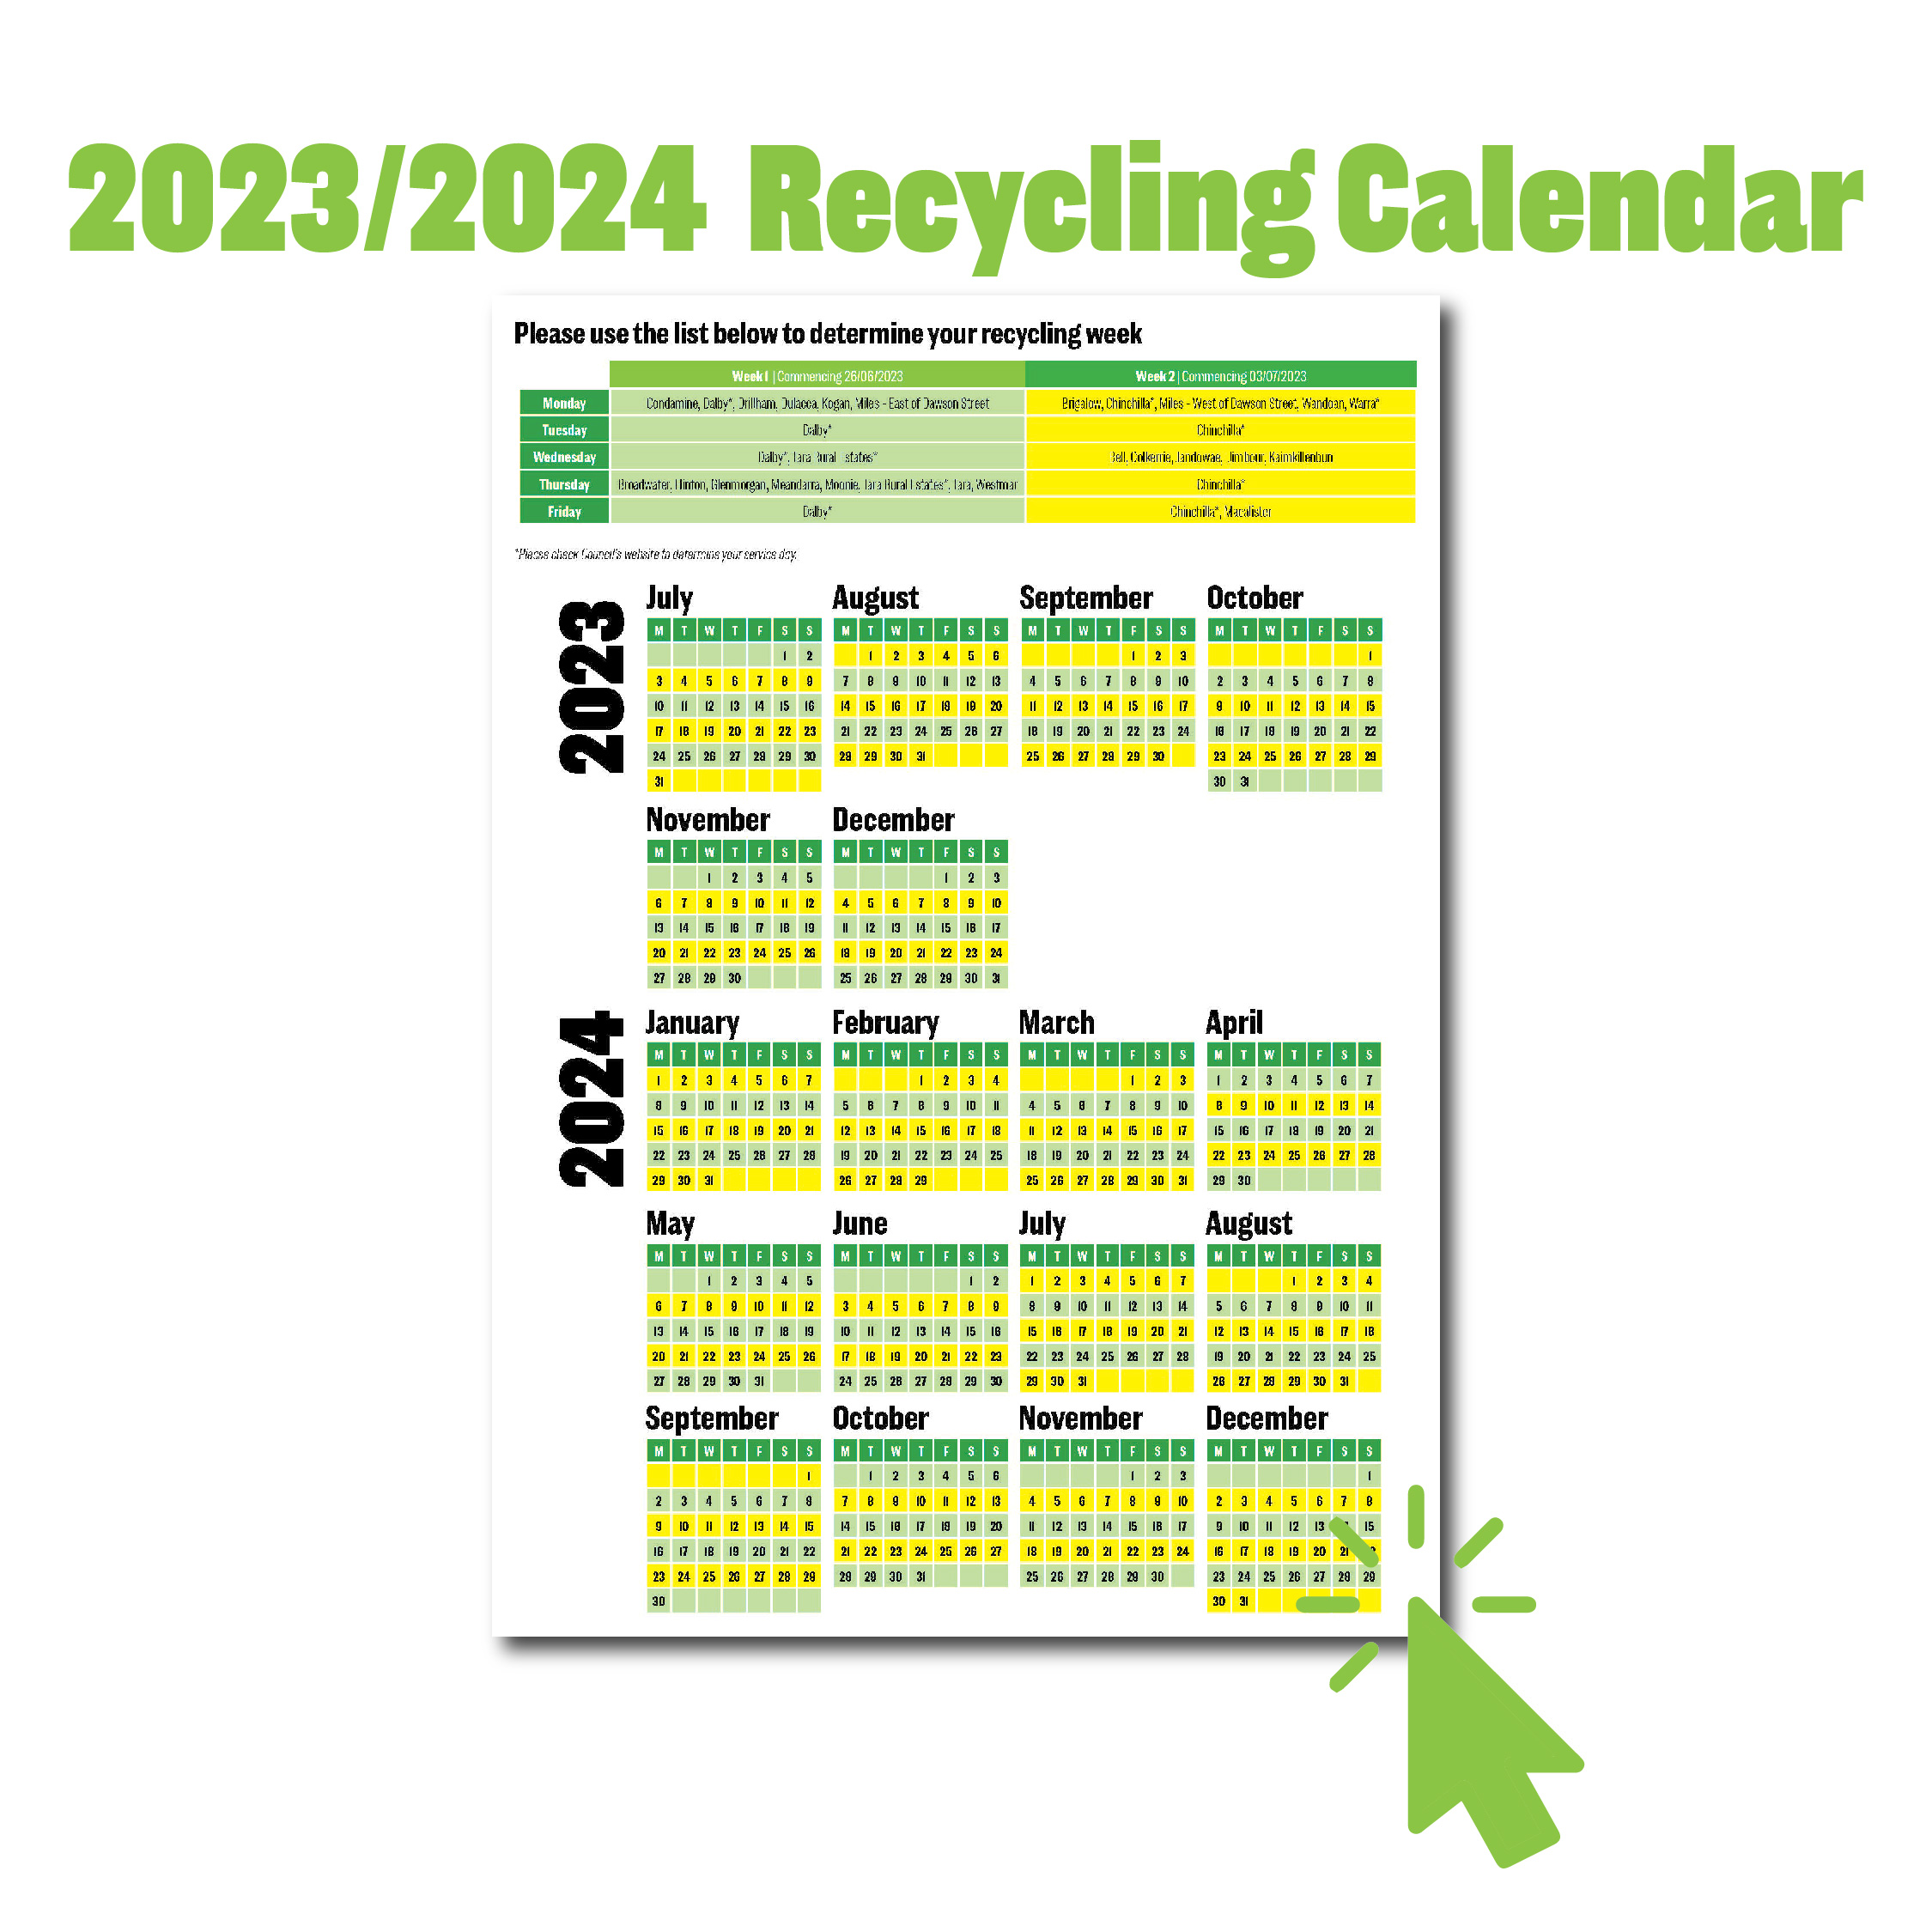 WDRC Recycling Calendar 23/24